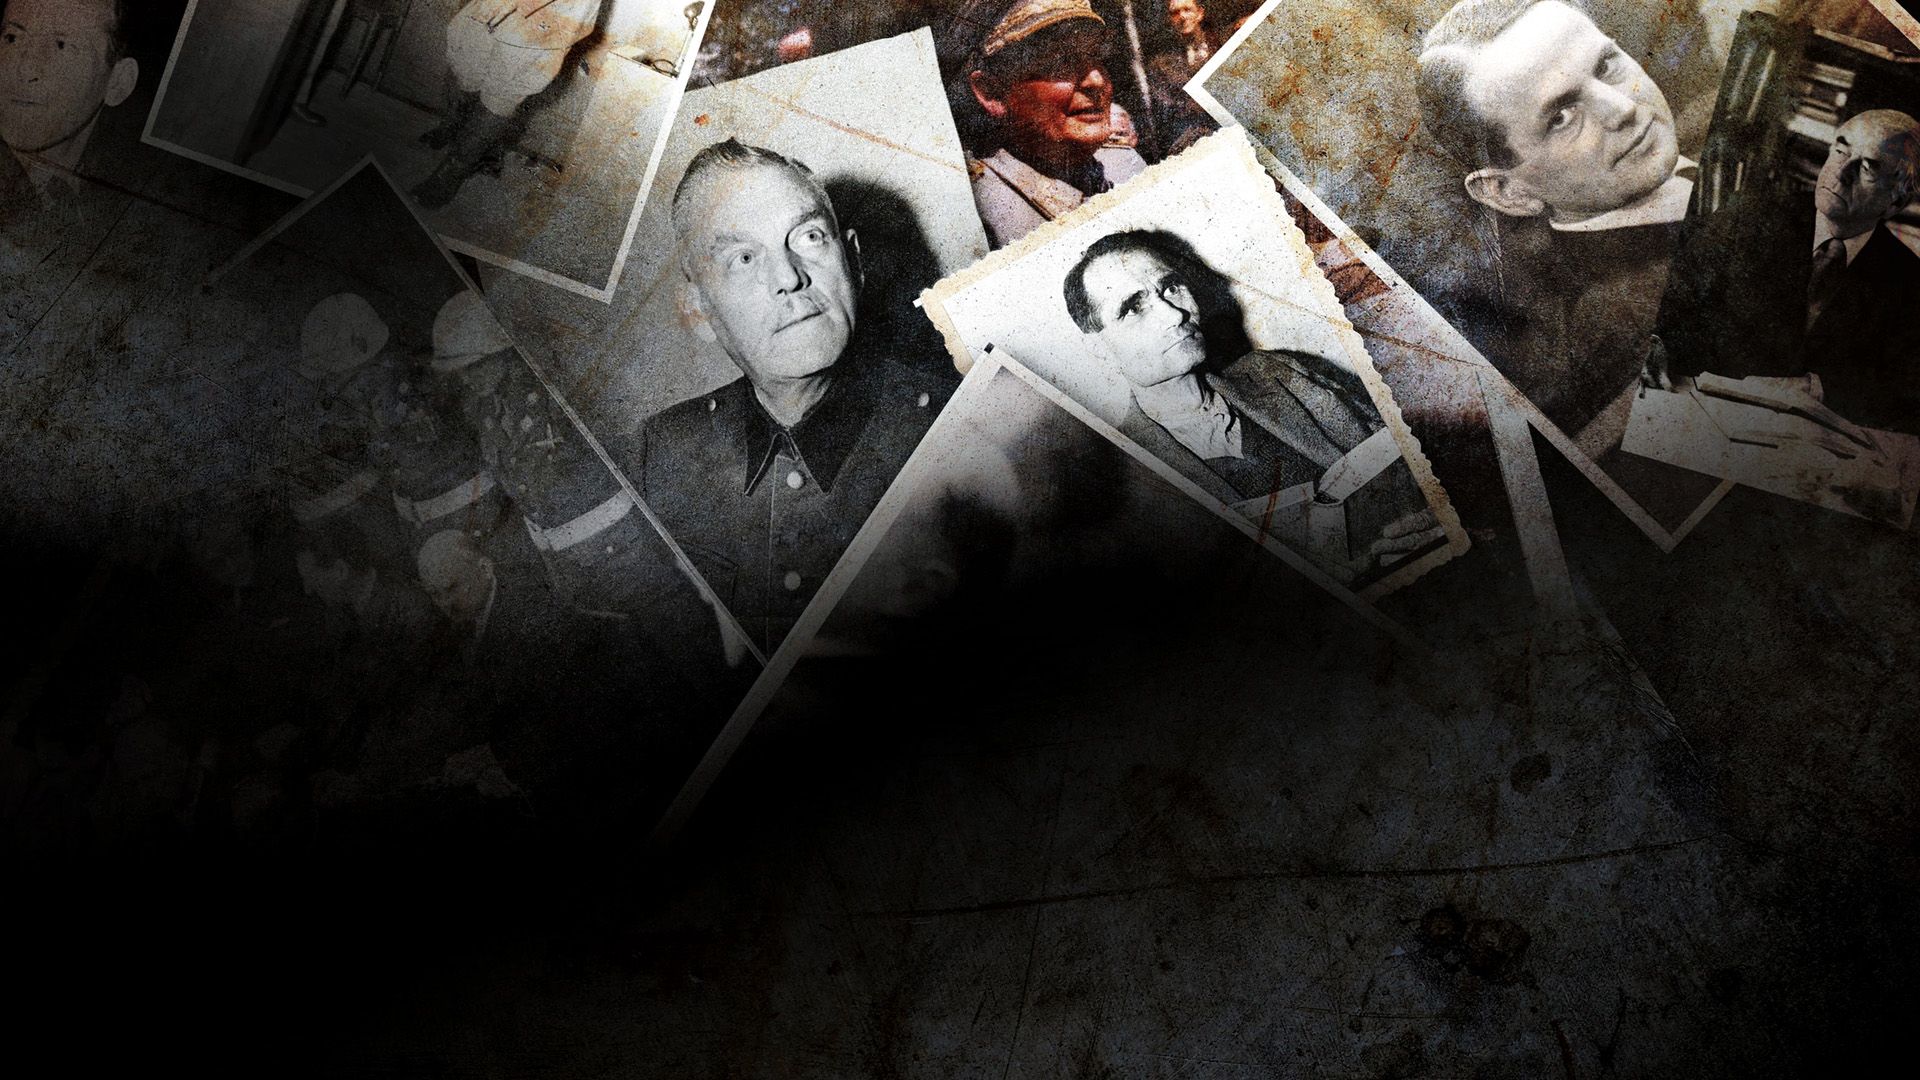 Nazis at Nuremberg: The Lost Testimony background